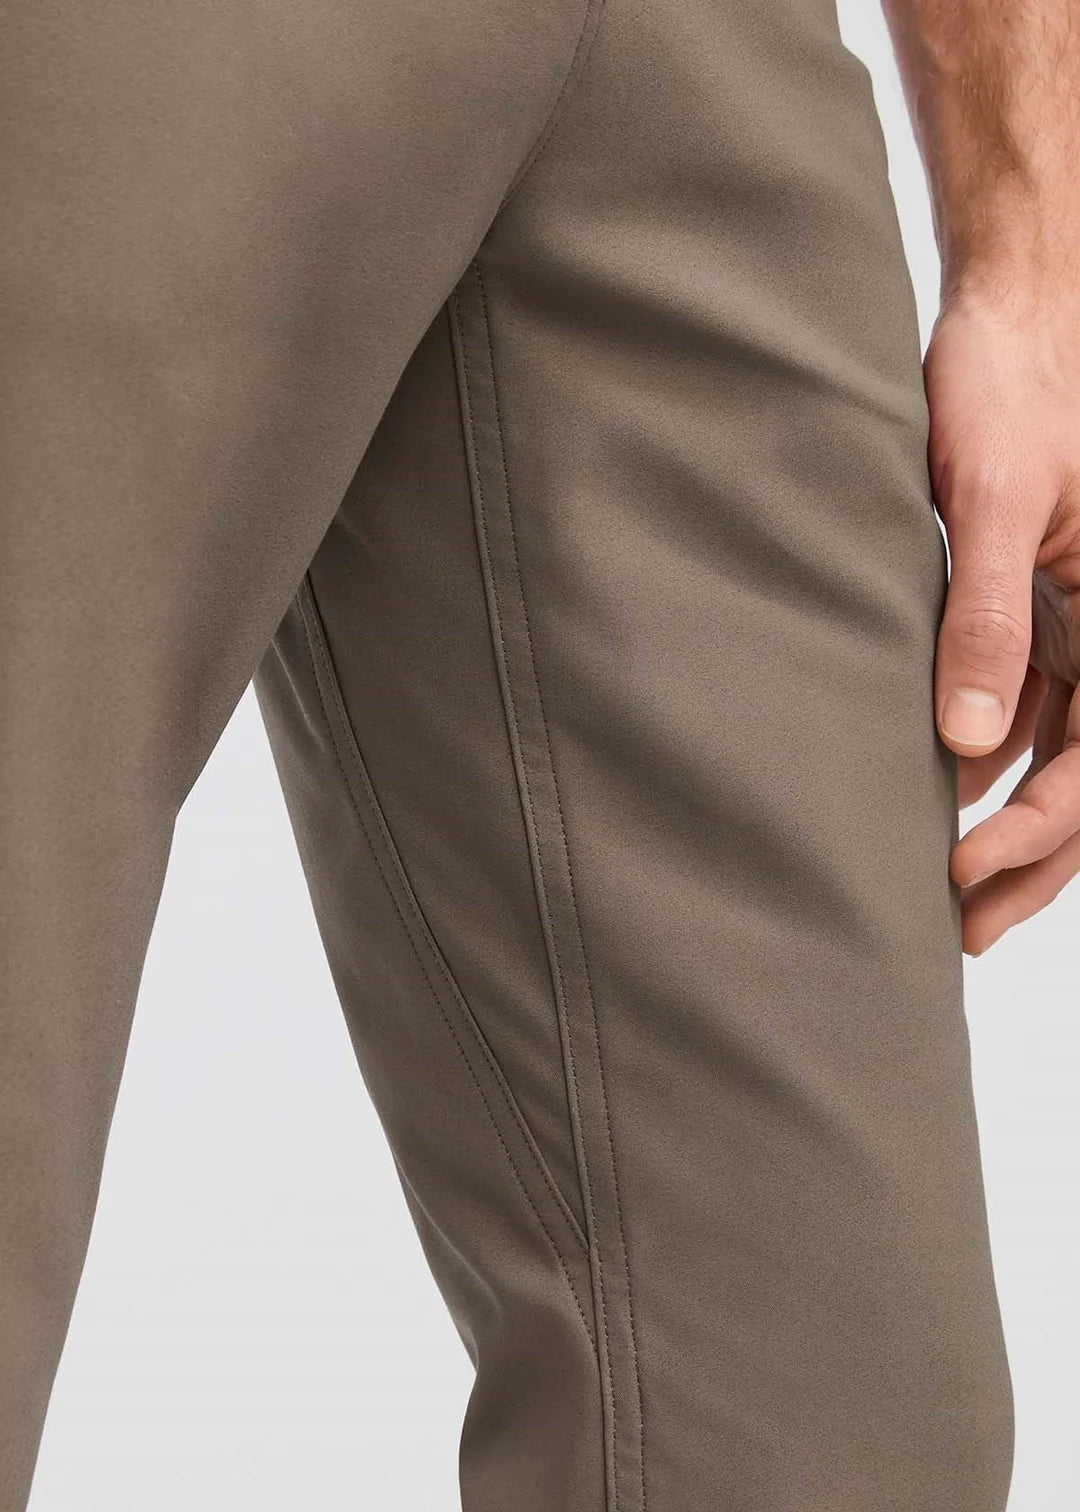 m bottoms - DUER - NuStretch Slim 5-Pocket Pants - PLENTY